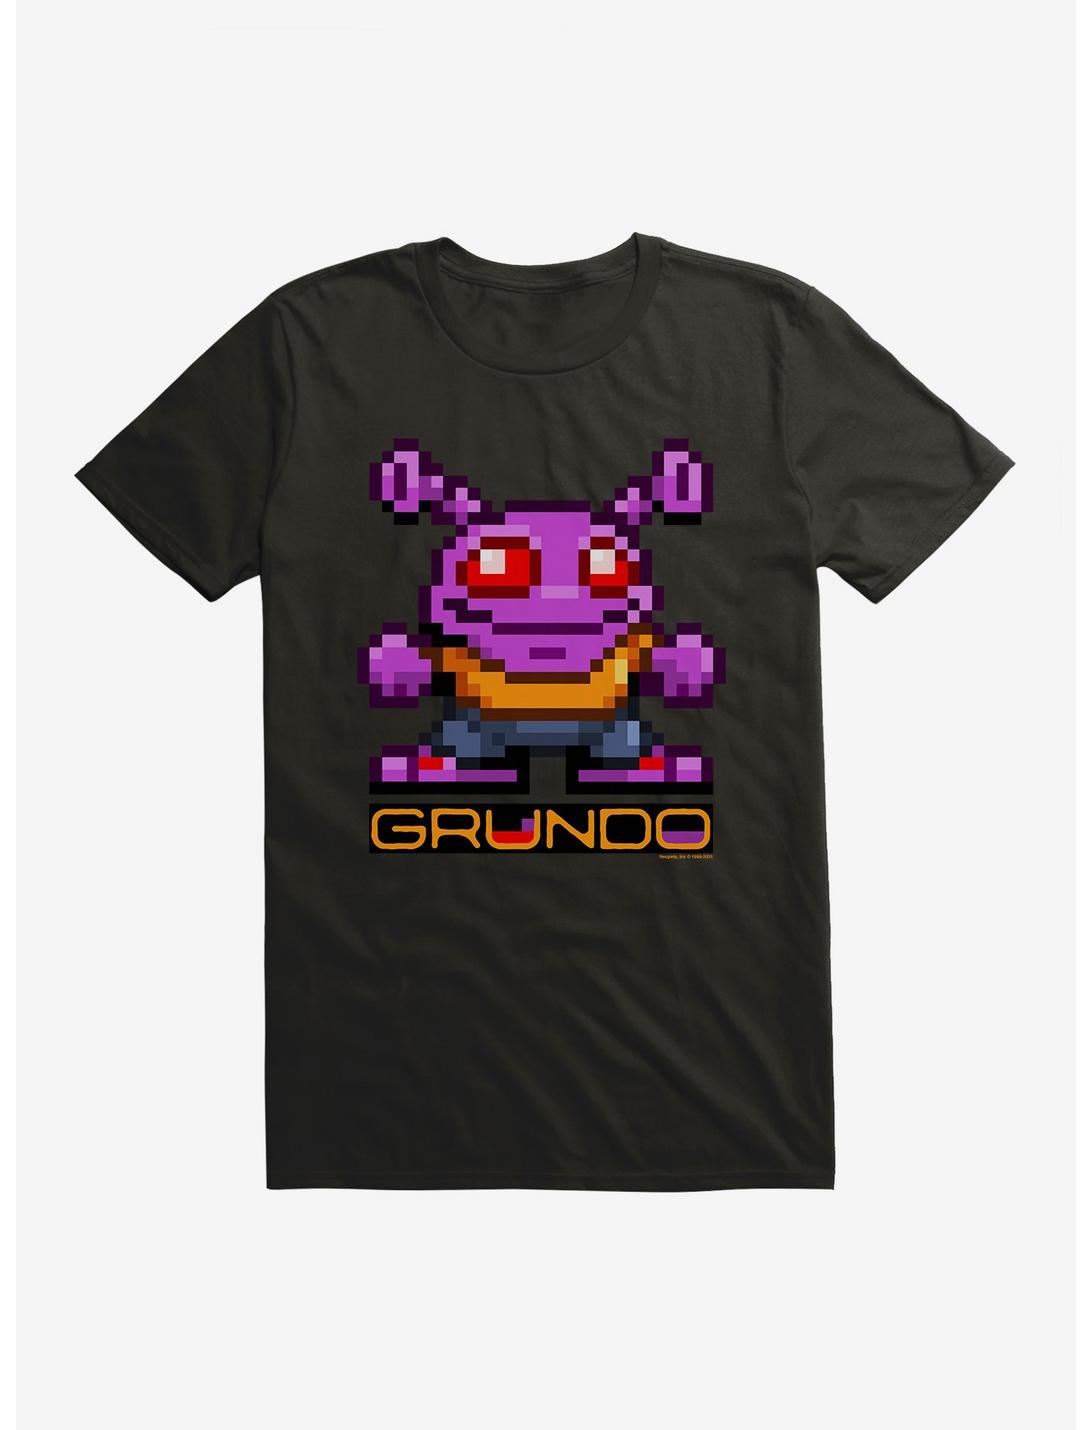 Neopets 8-Bit Grundo T-Shirt, BLACK, hi-res